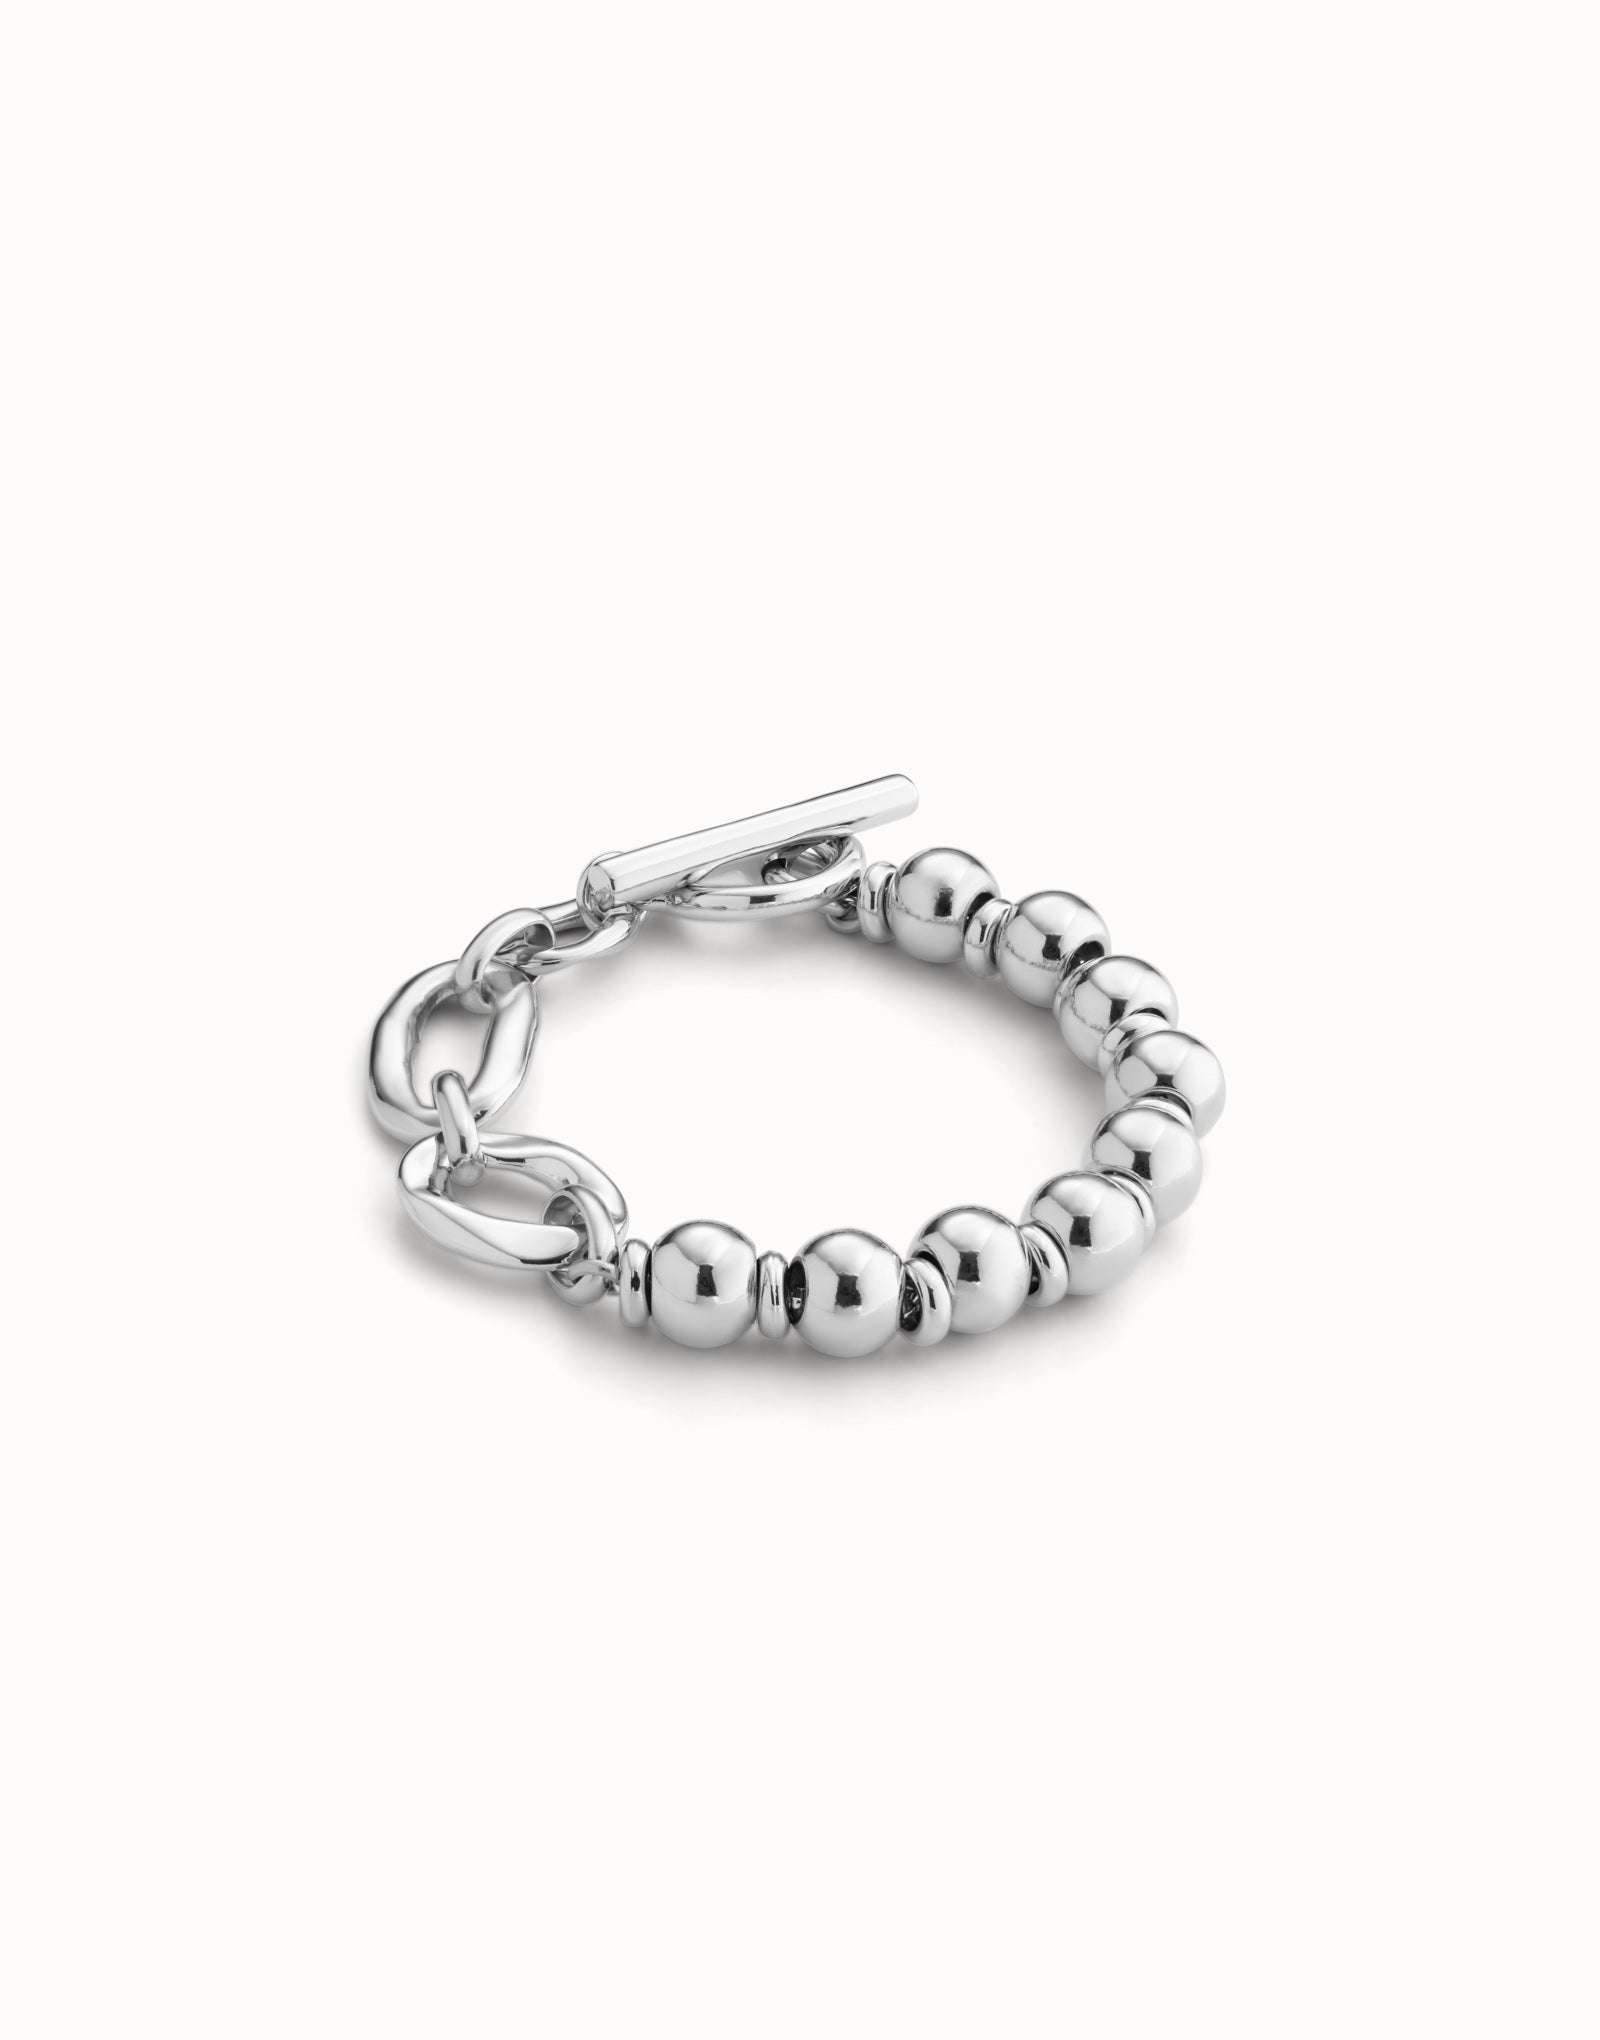 Cheerful Silver Bracelet